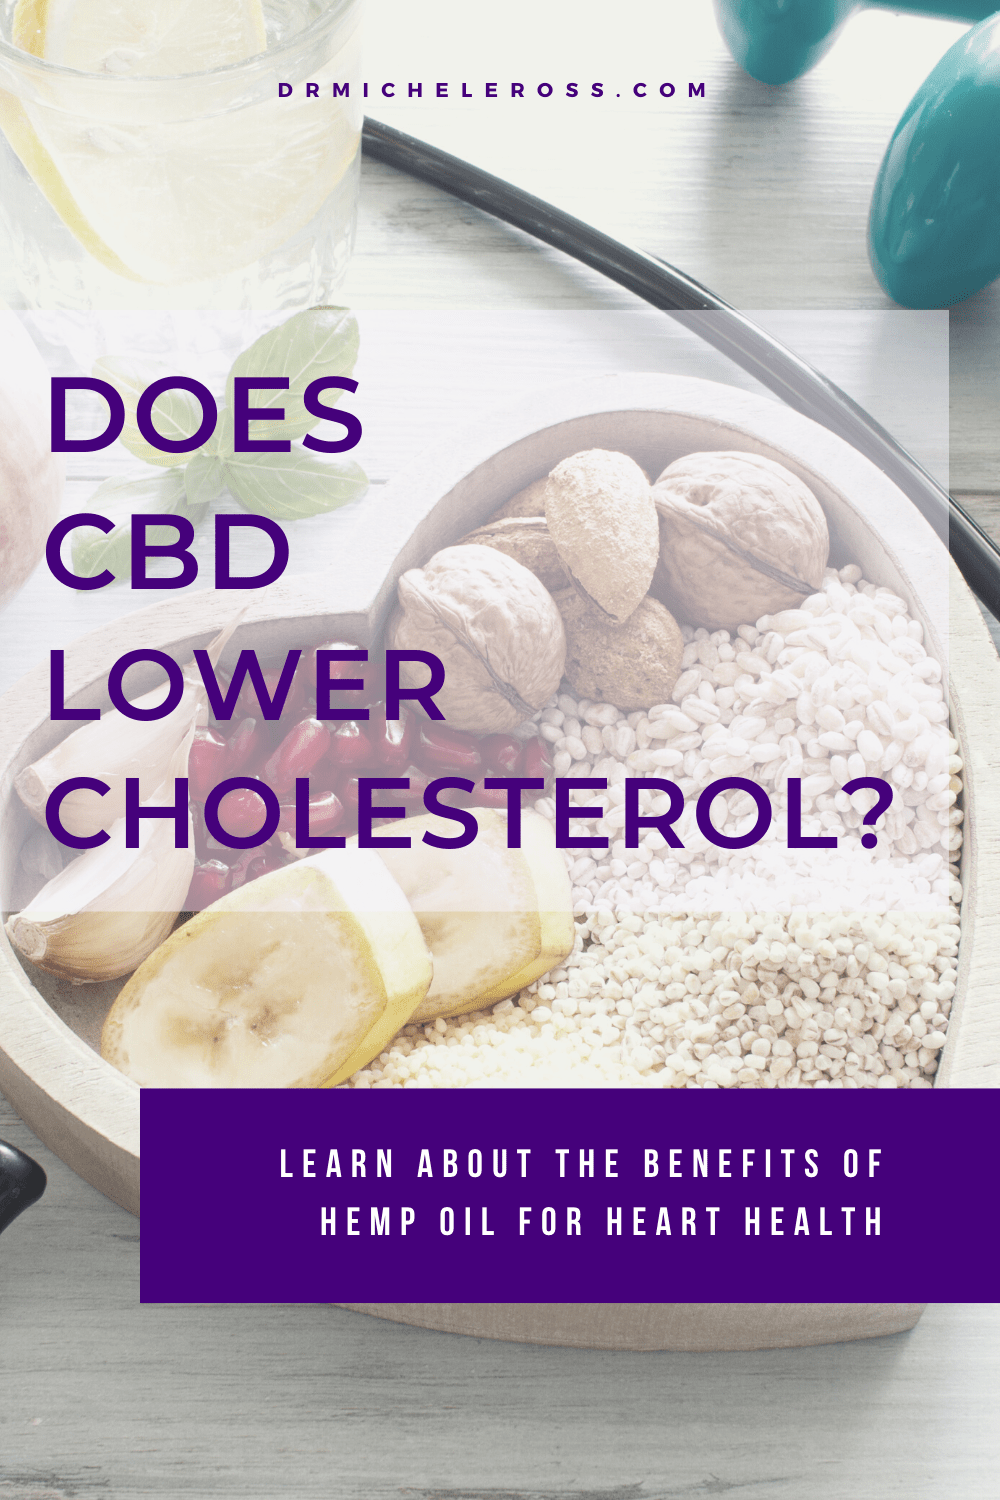 Does CBD Oil Lower Cholesterol?